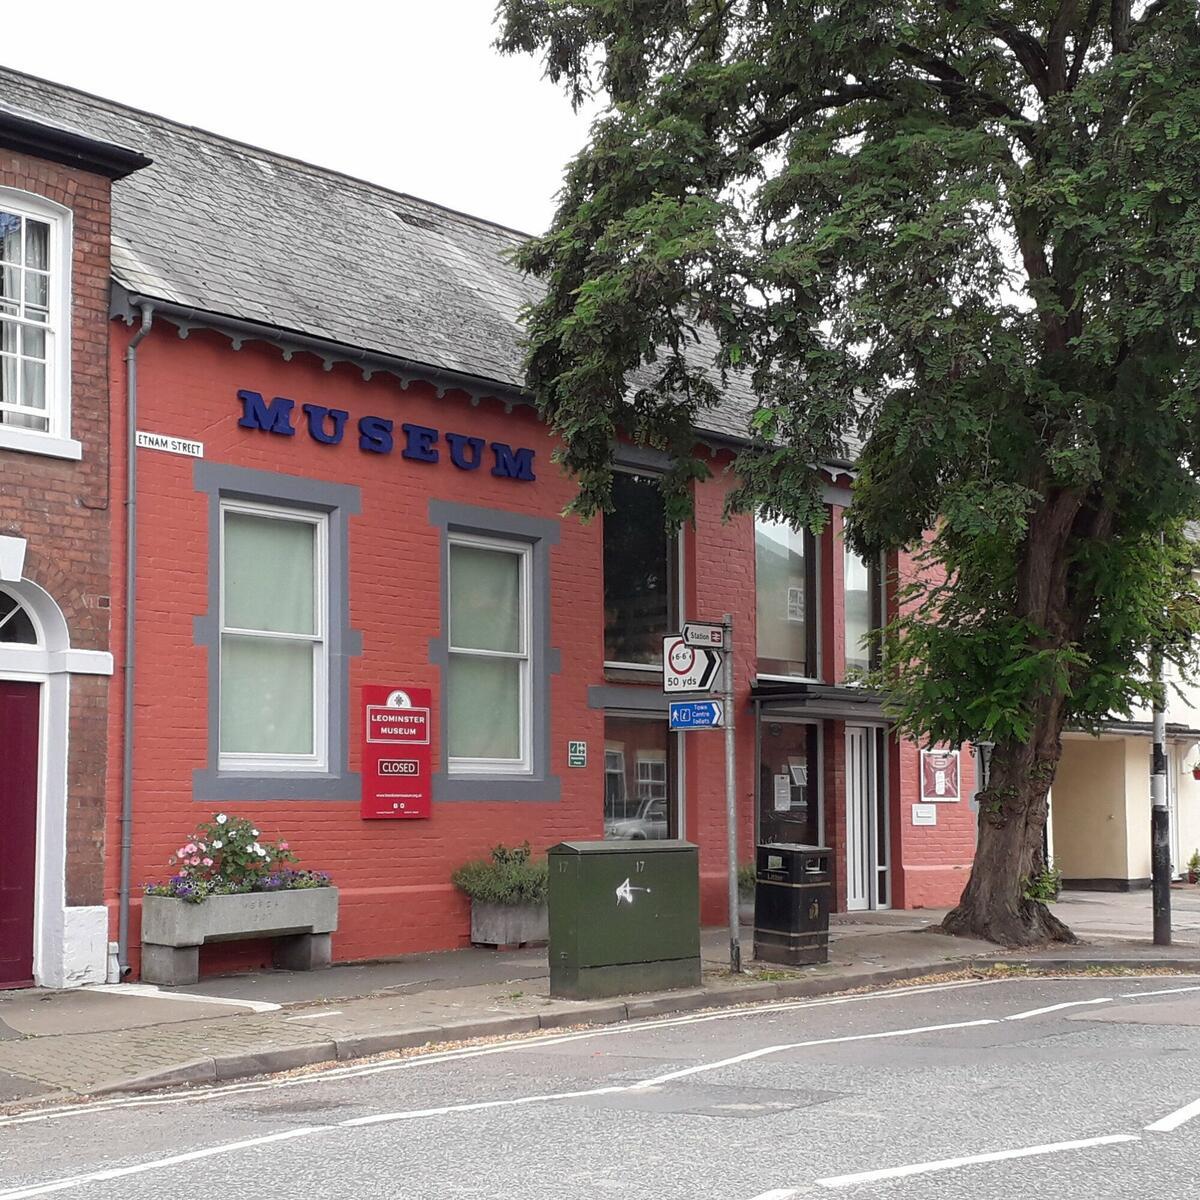 The Museum in Etnam Street